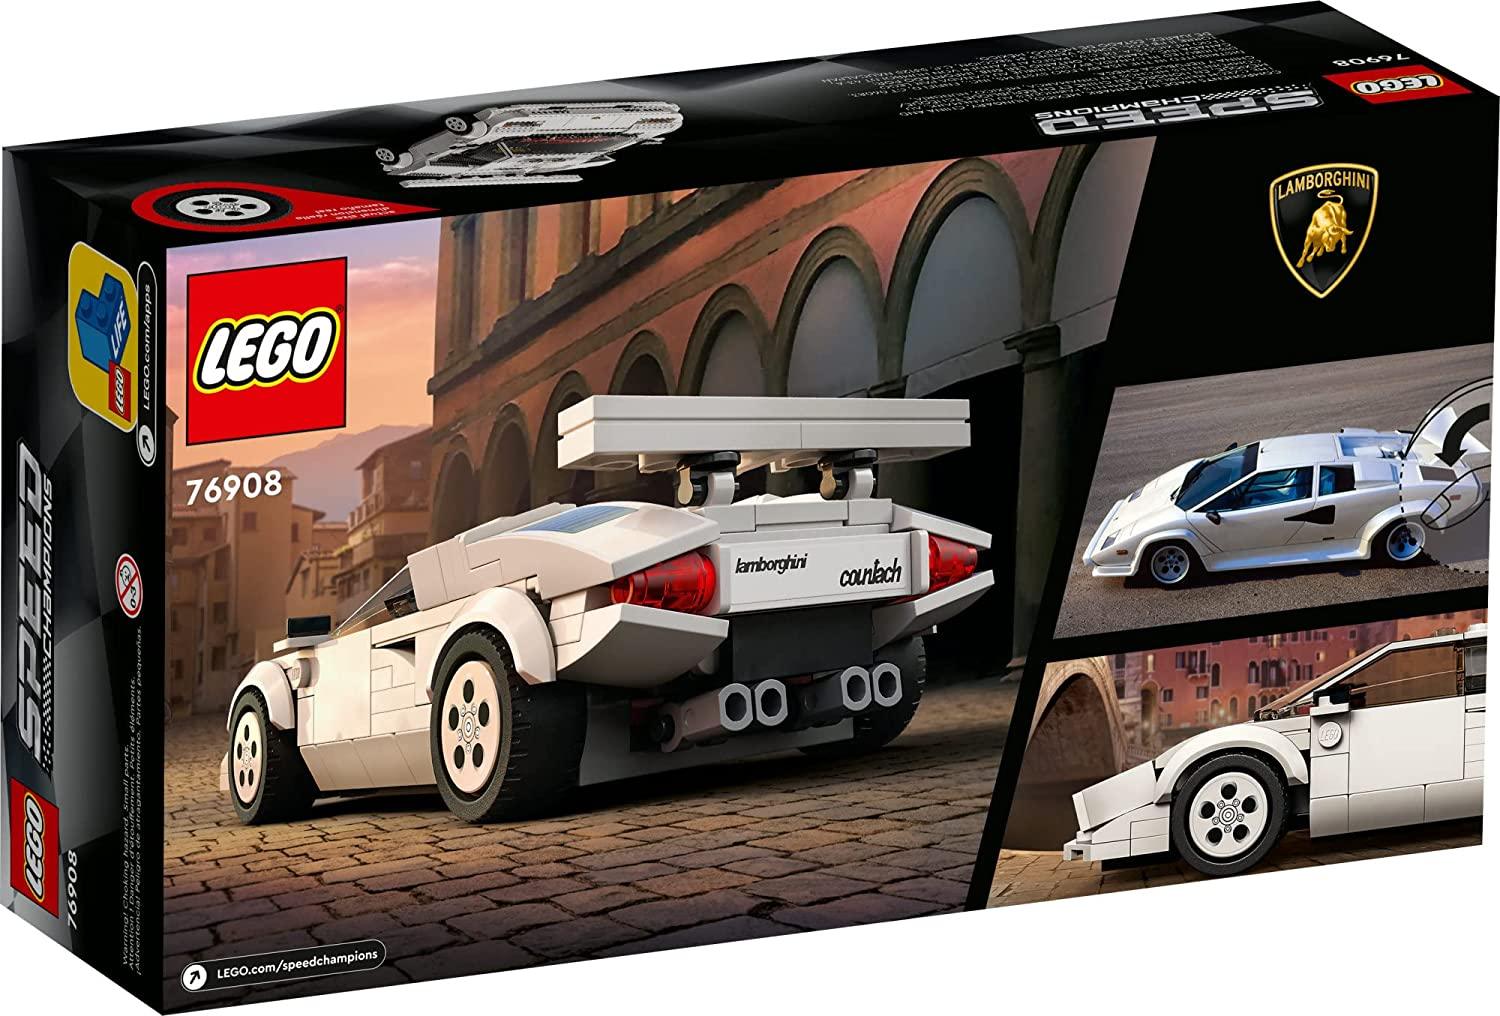 Buy LEGO Speed Champions Lamborghini Countach Car Model Building Kit ...